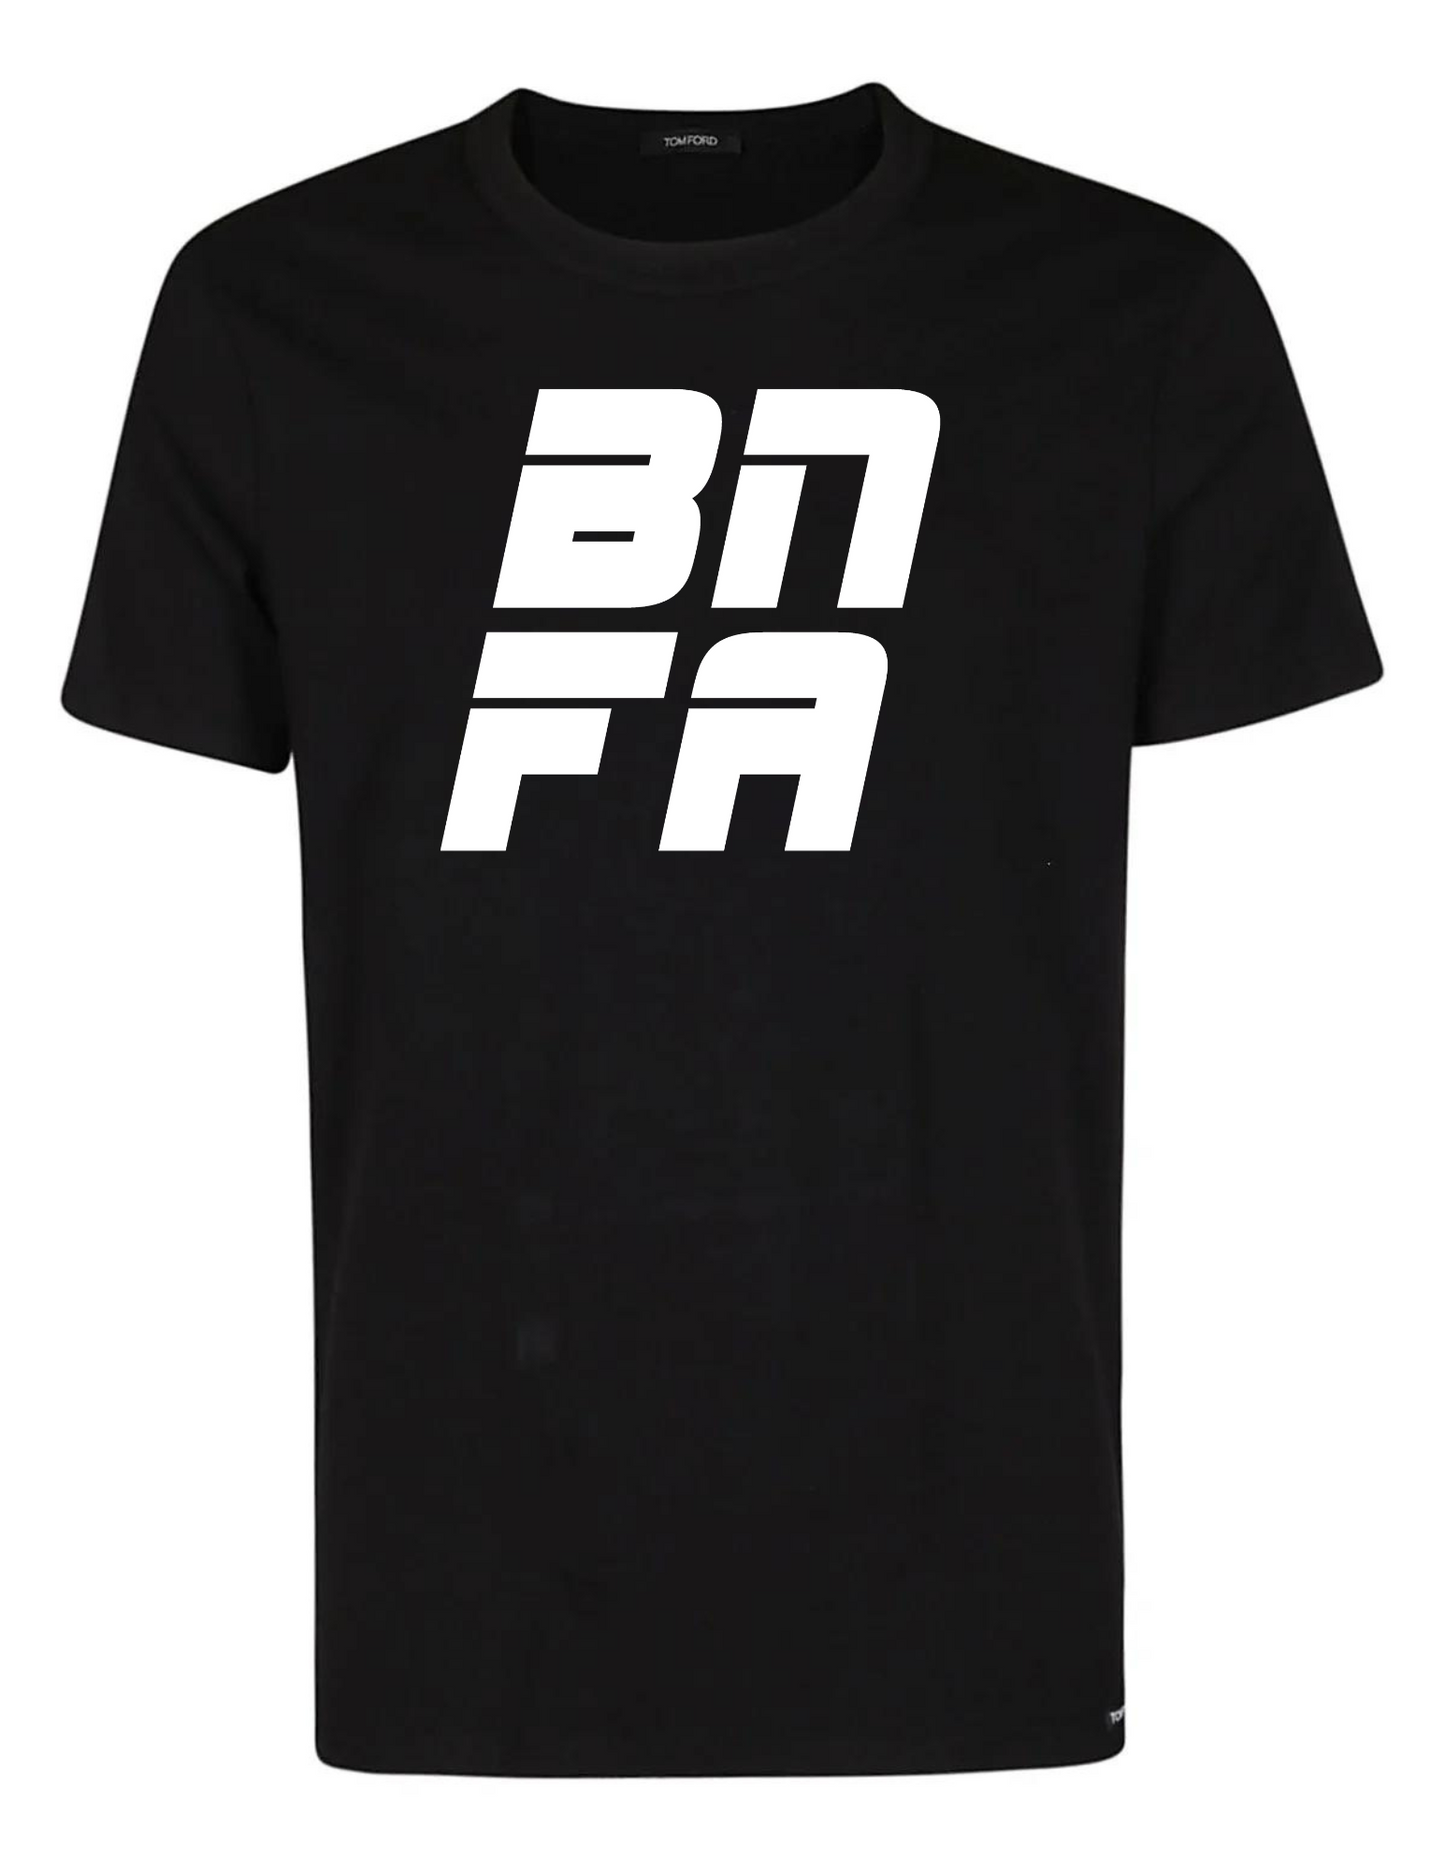 BNFA Classic Big Logo T-shirts